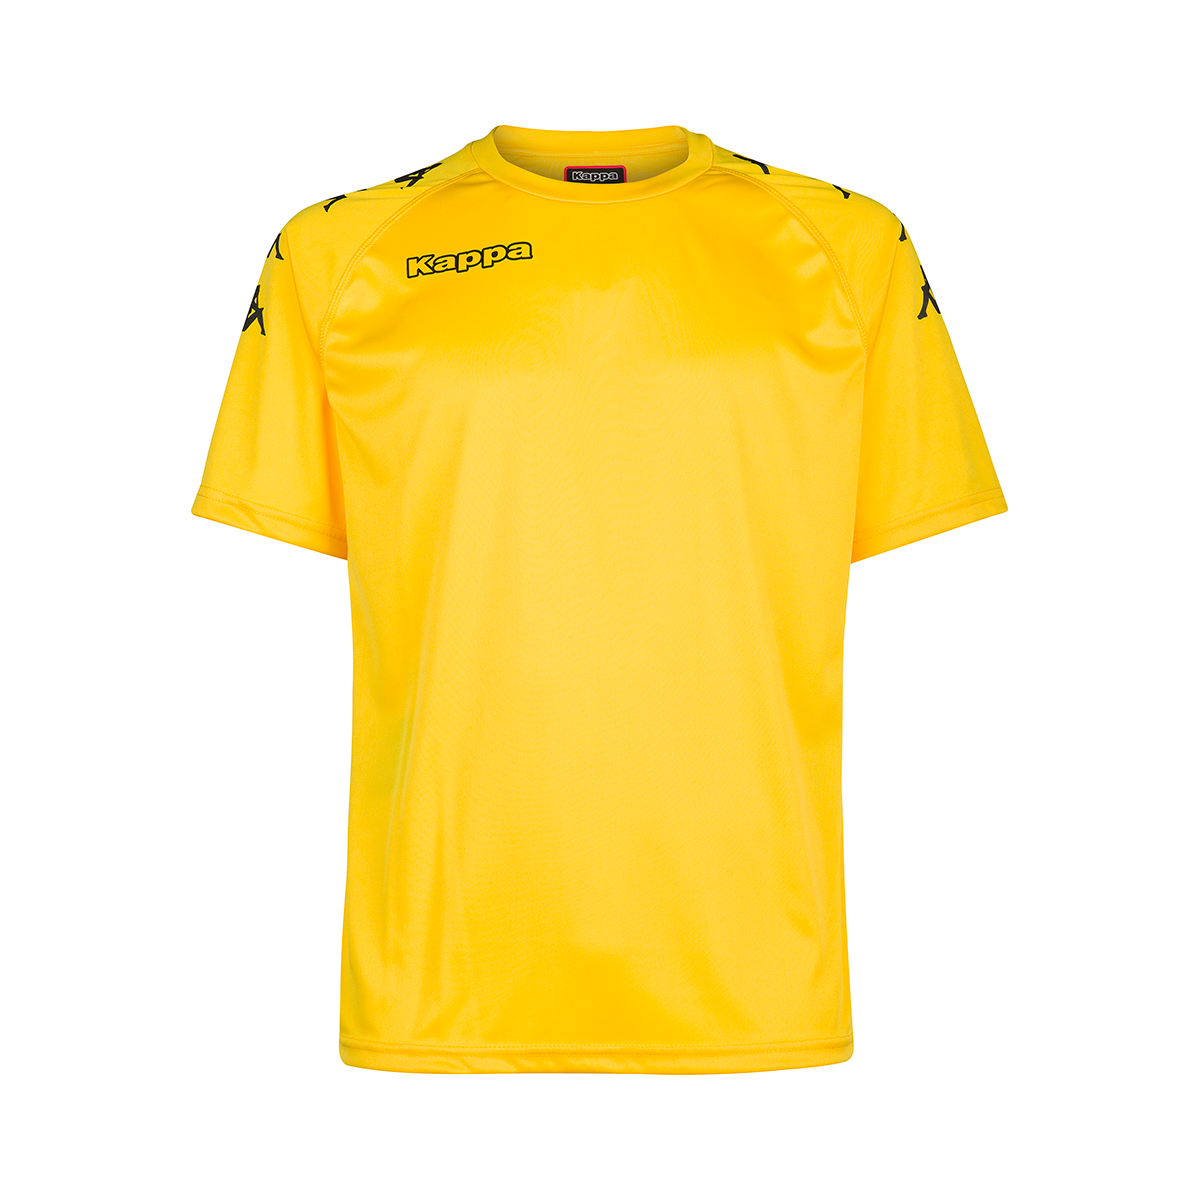 Camiseta  Castolo Amarillo Hombre - Imagen 1